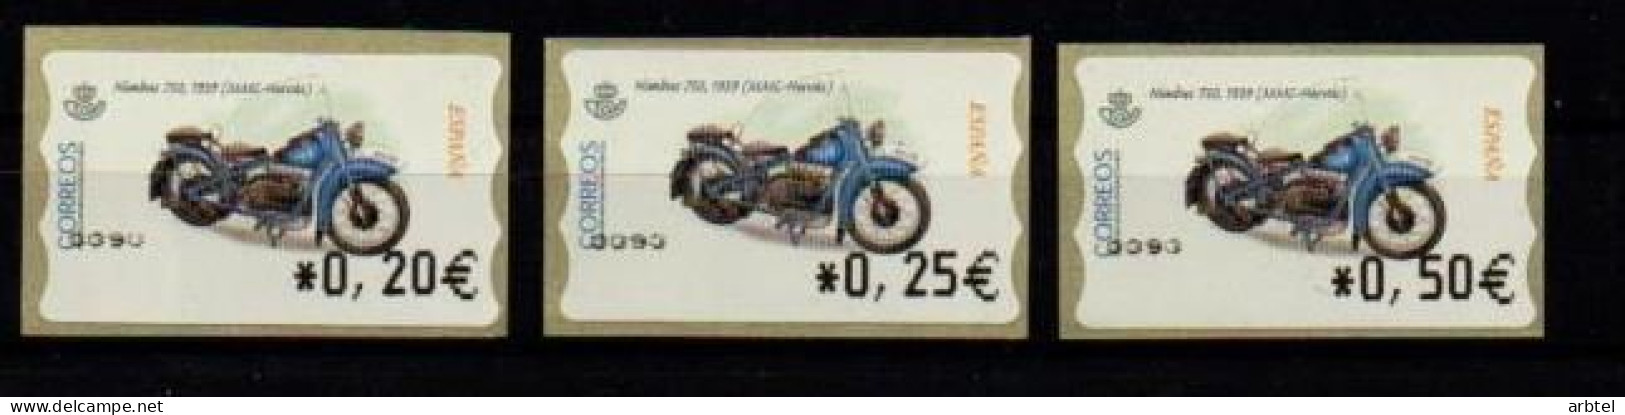 ESPAÑA SPAIN ATM MOTO MOTORCYCLE NIMBUS 750 - Moto